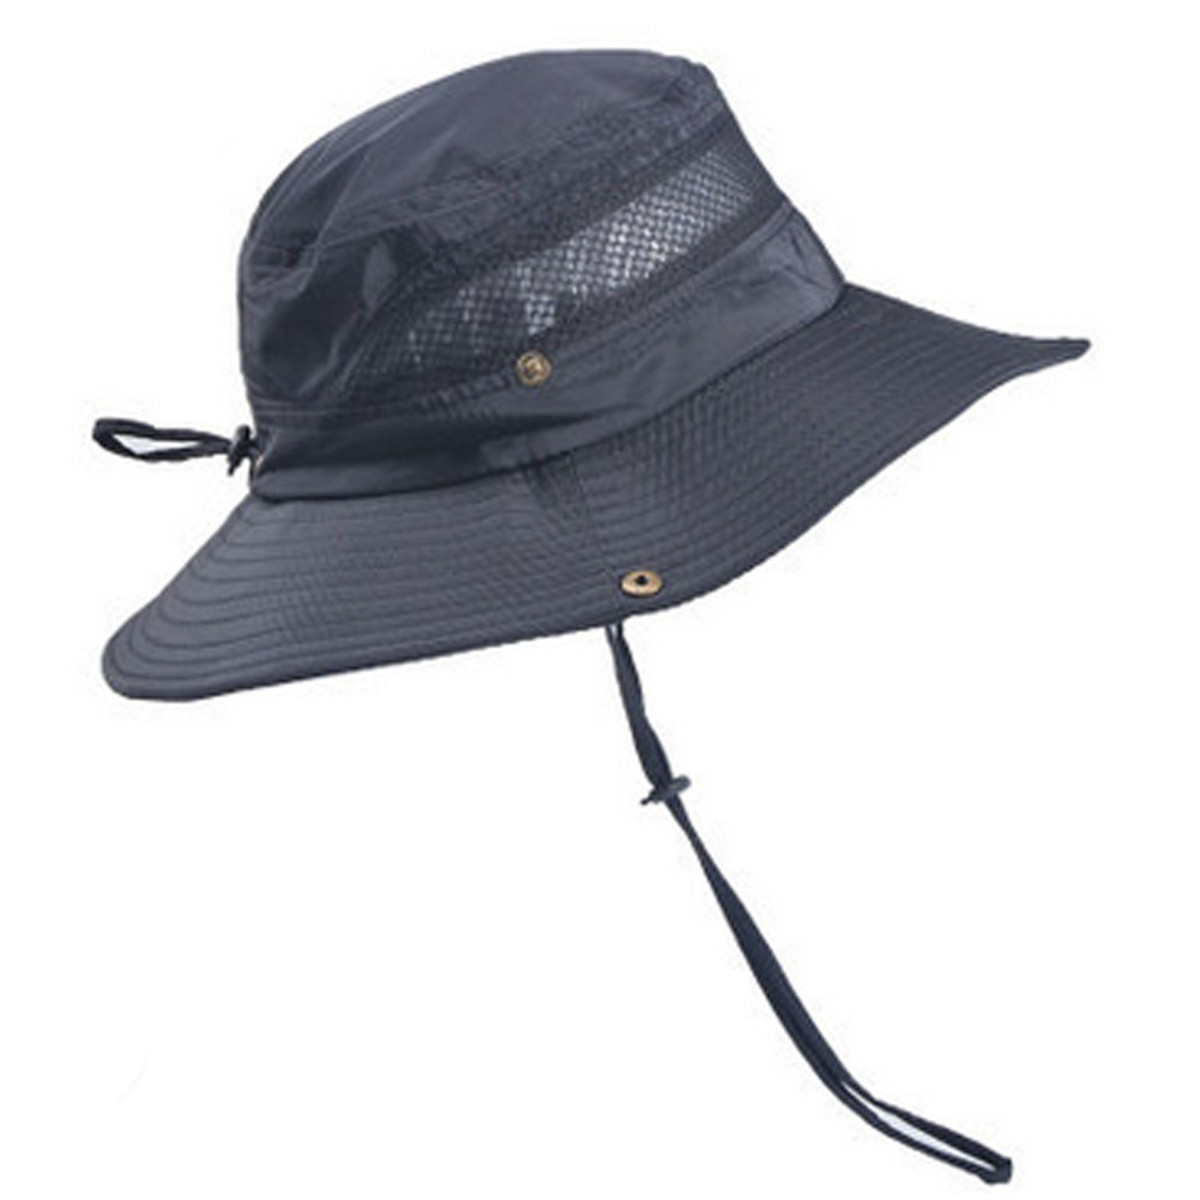 DuAnyozu Mens Bucket Hats Wide Brim Sun Cap Military Camo Hunting Fishing Hiking - image 1 of 3